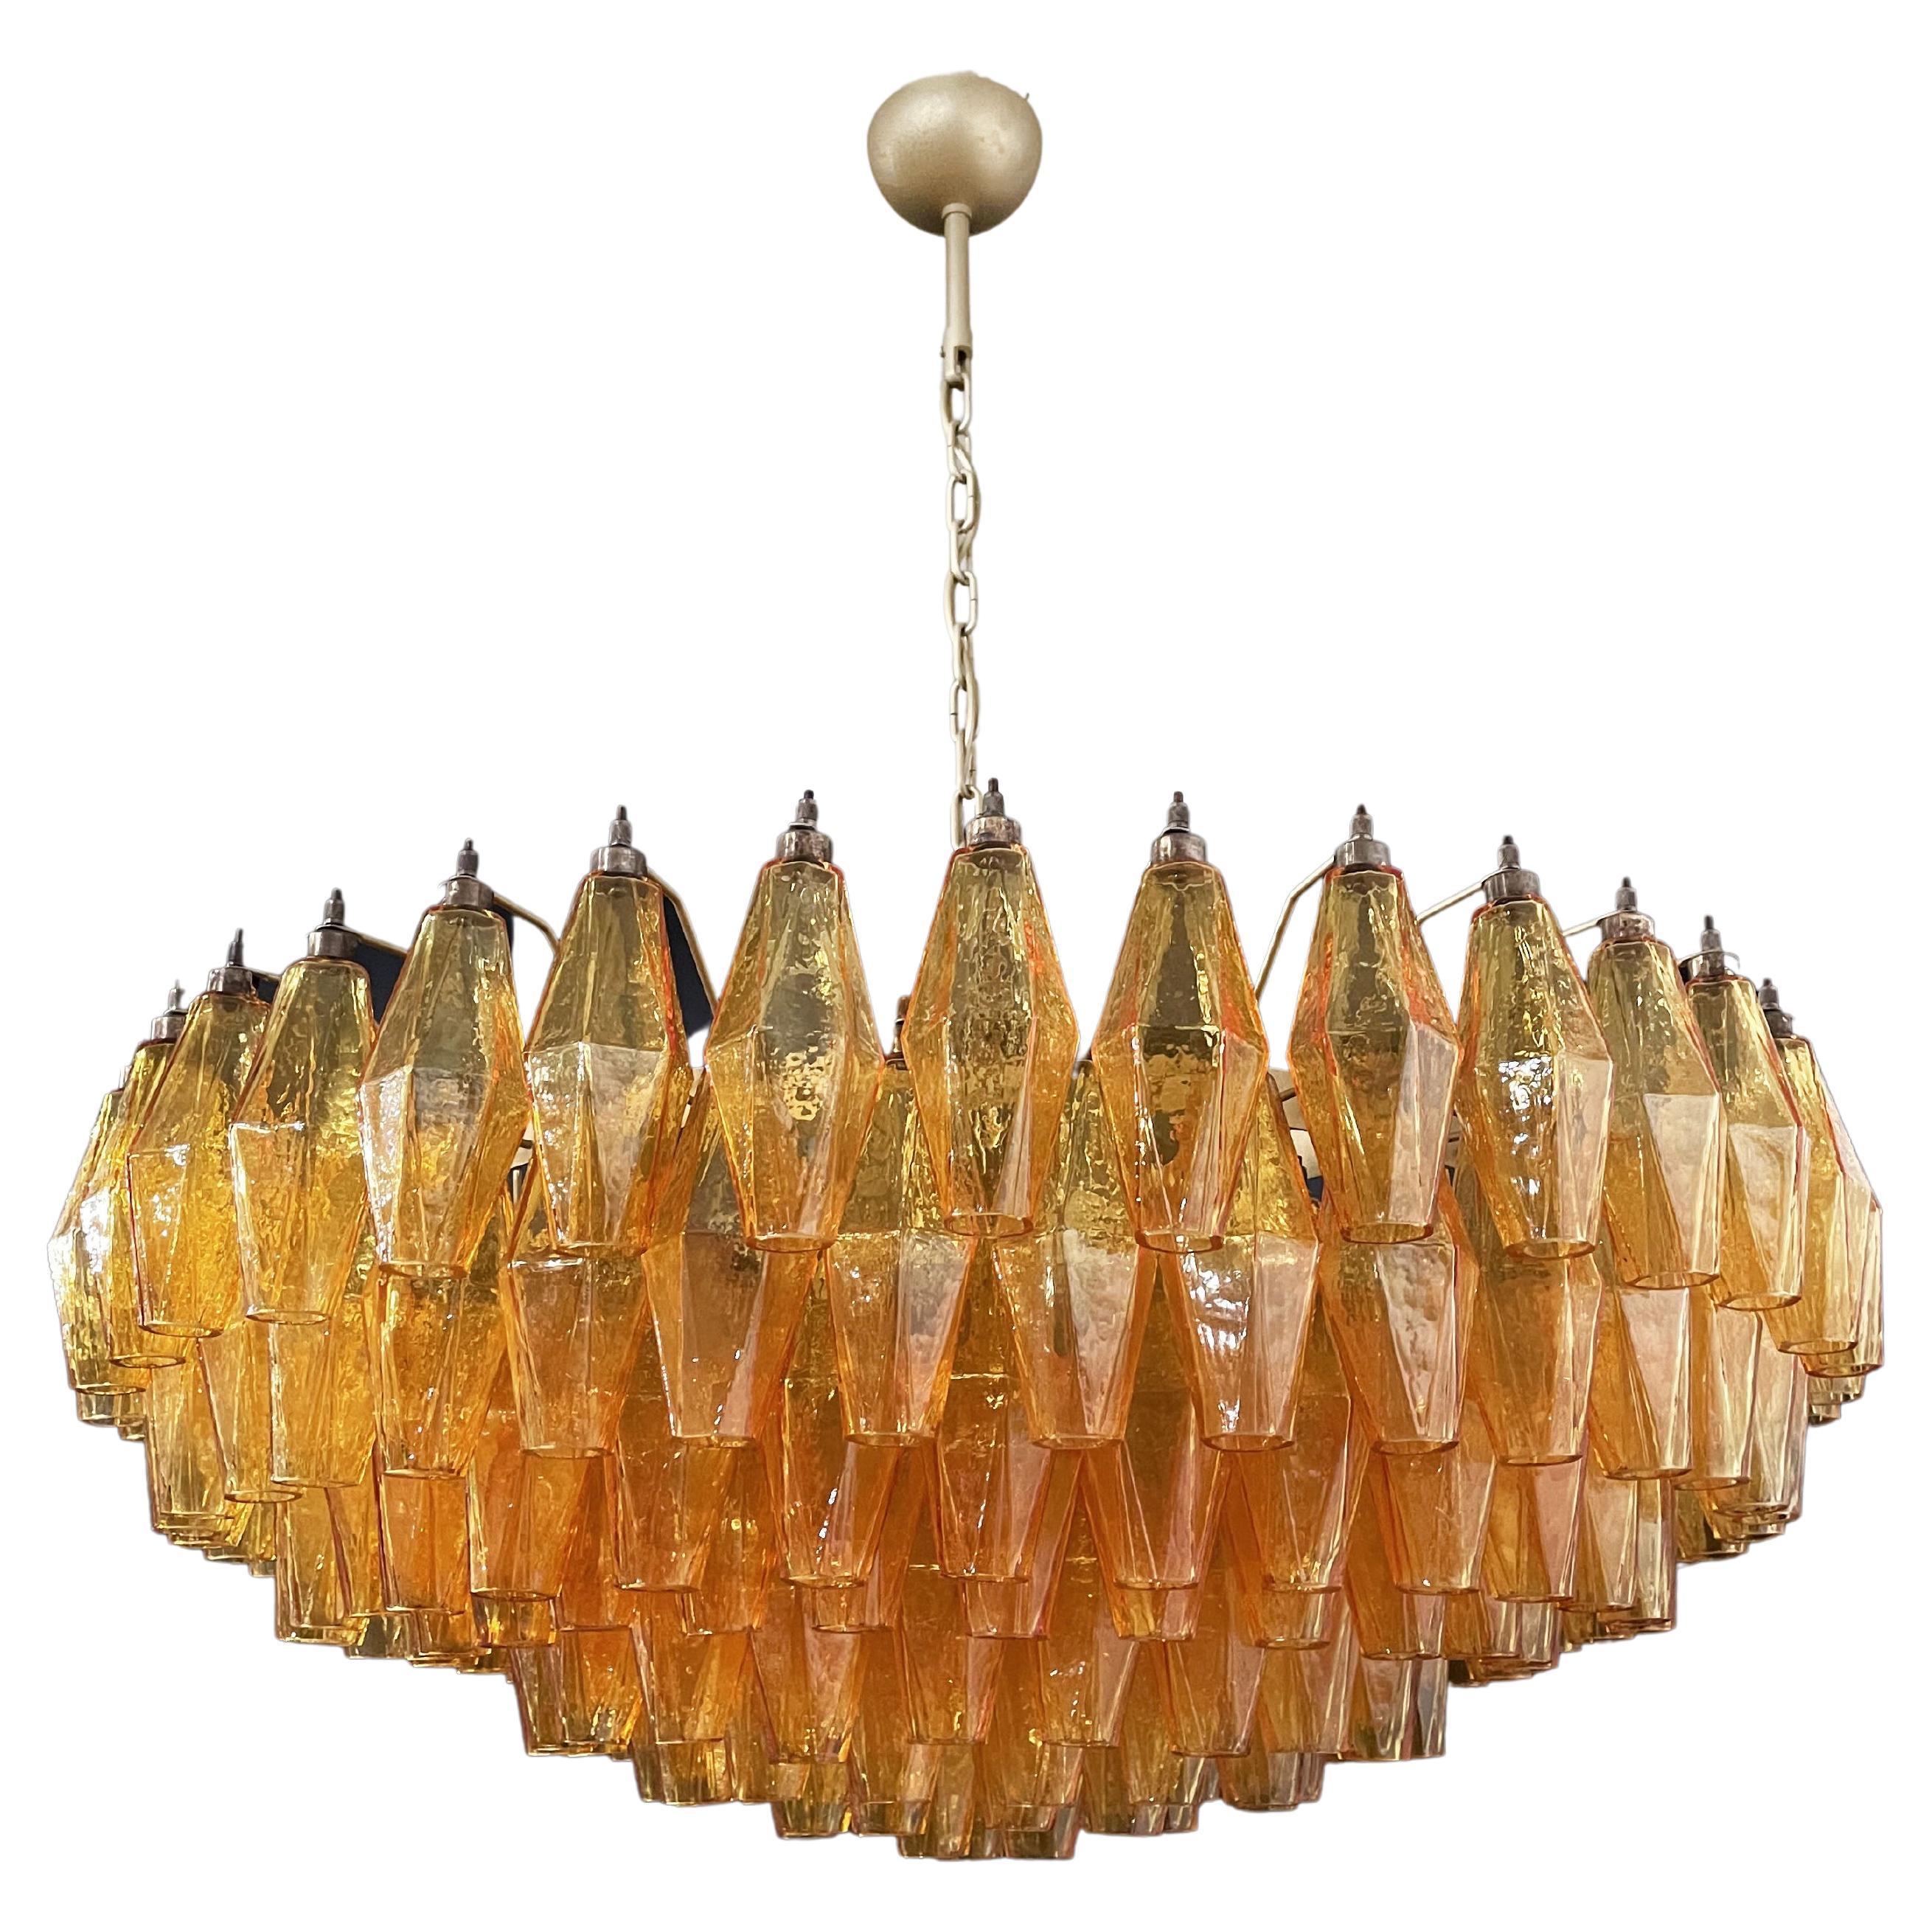 Amazing Murano Glass Candelier, 185 Amber Poliedri